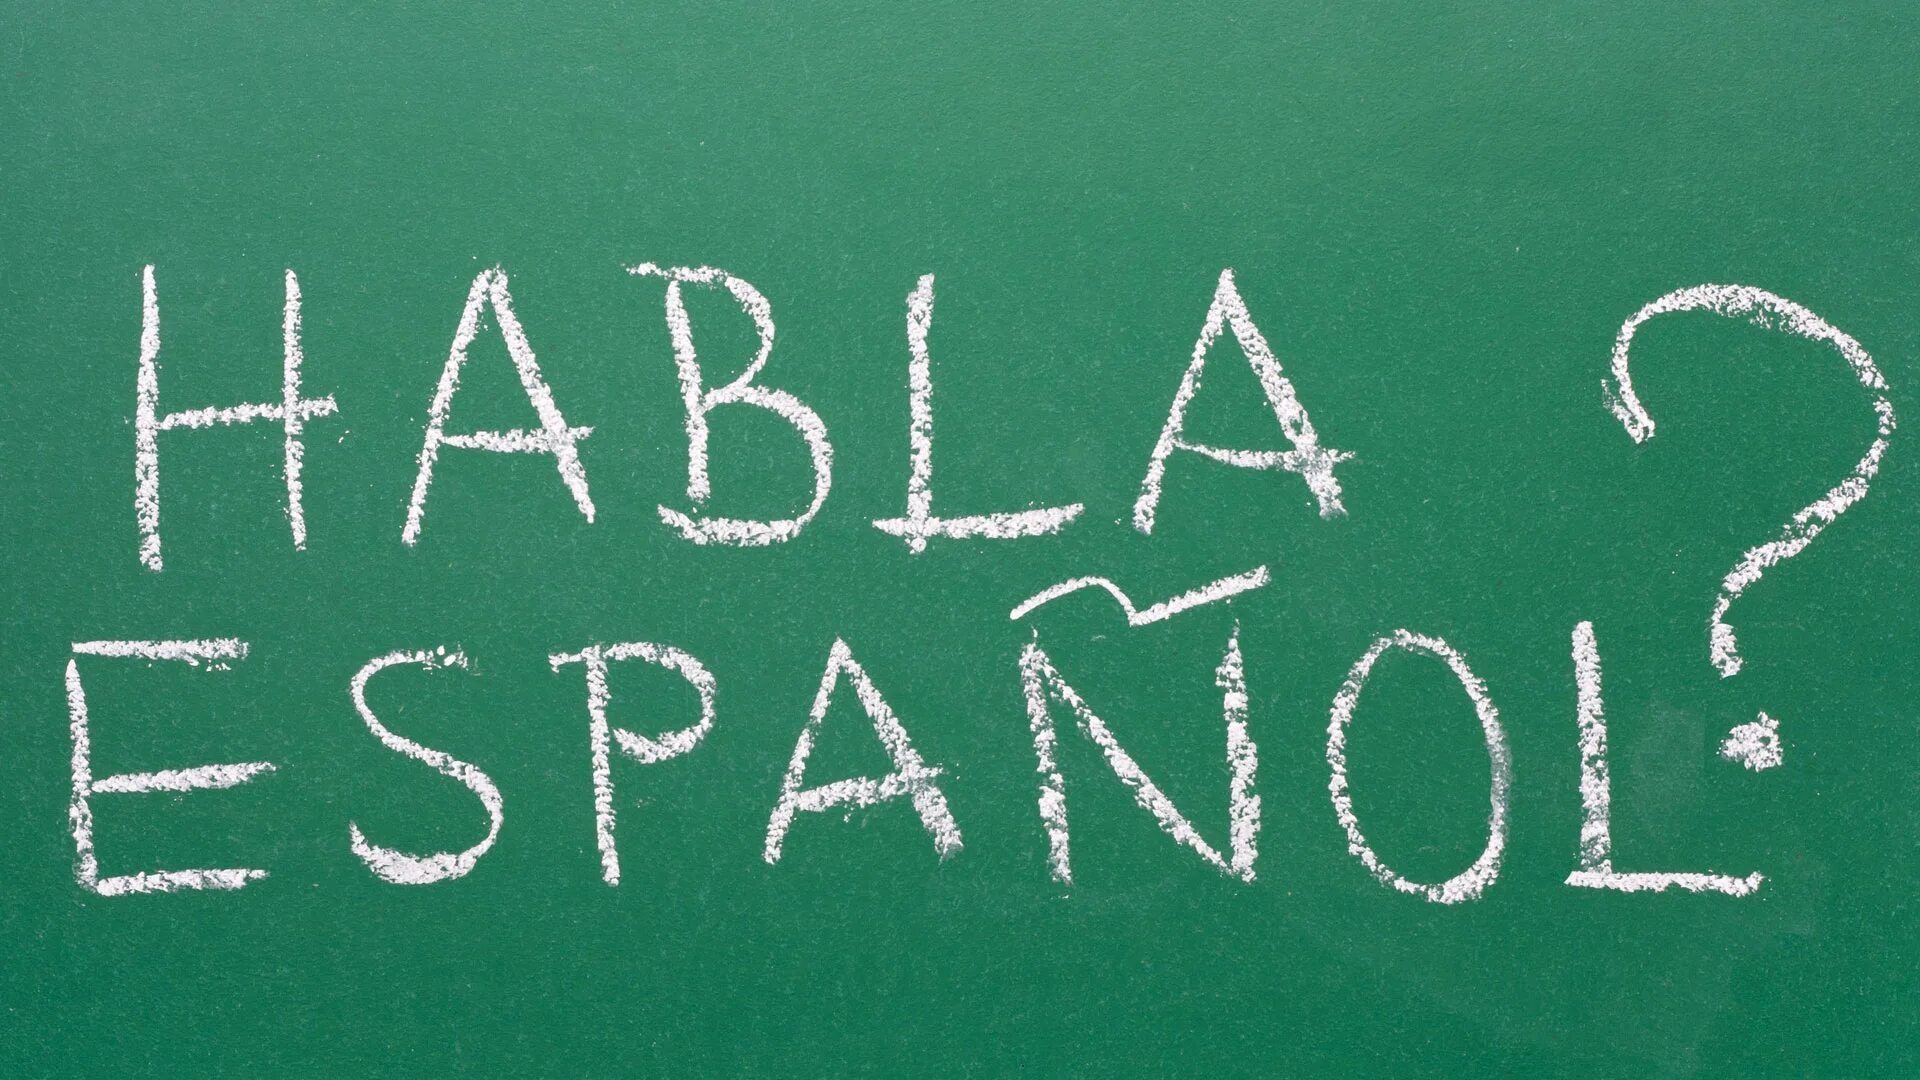 I can spanish. Испанский язык. Изучение испанского языка. Испанский язык в картинках. Испанский язык иллюстрации.